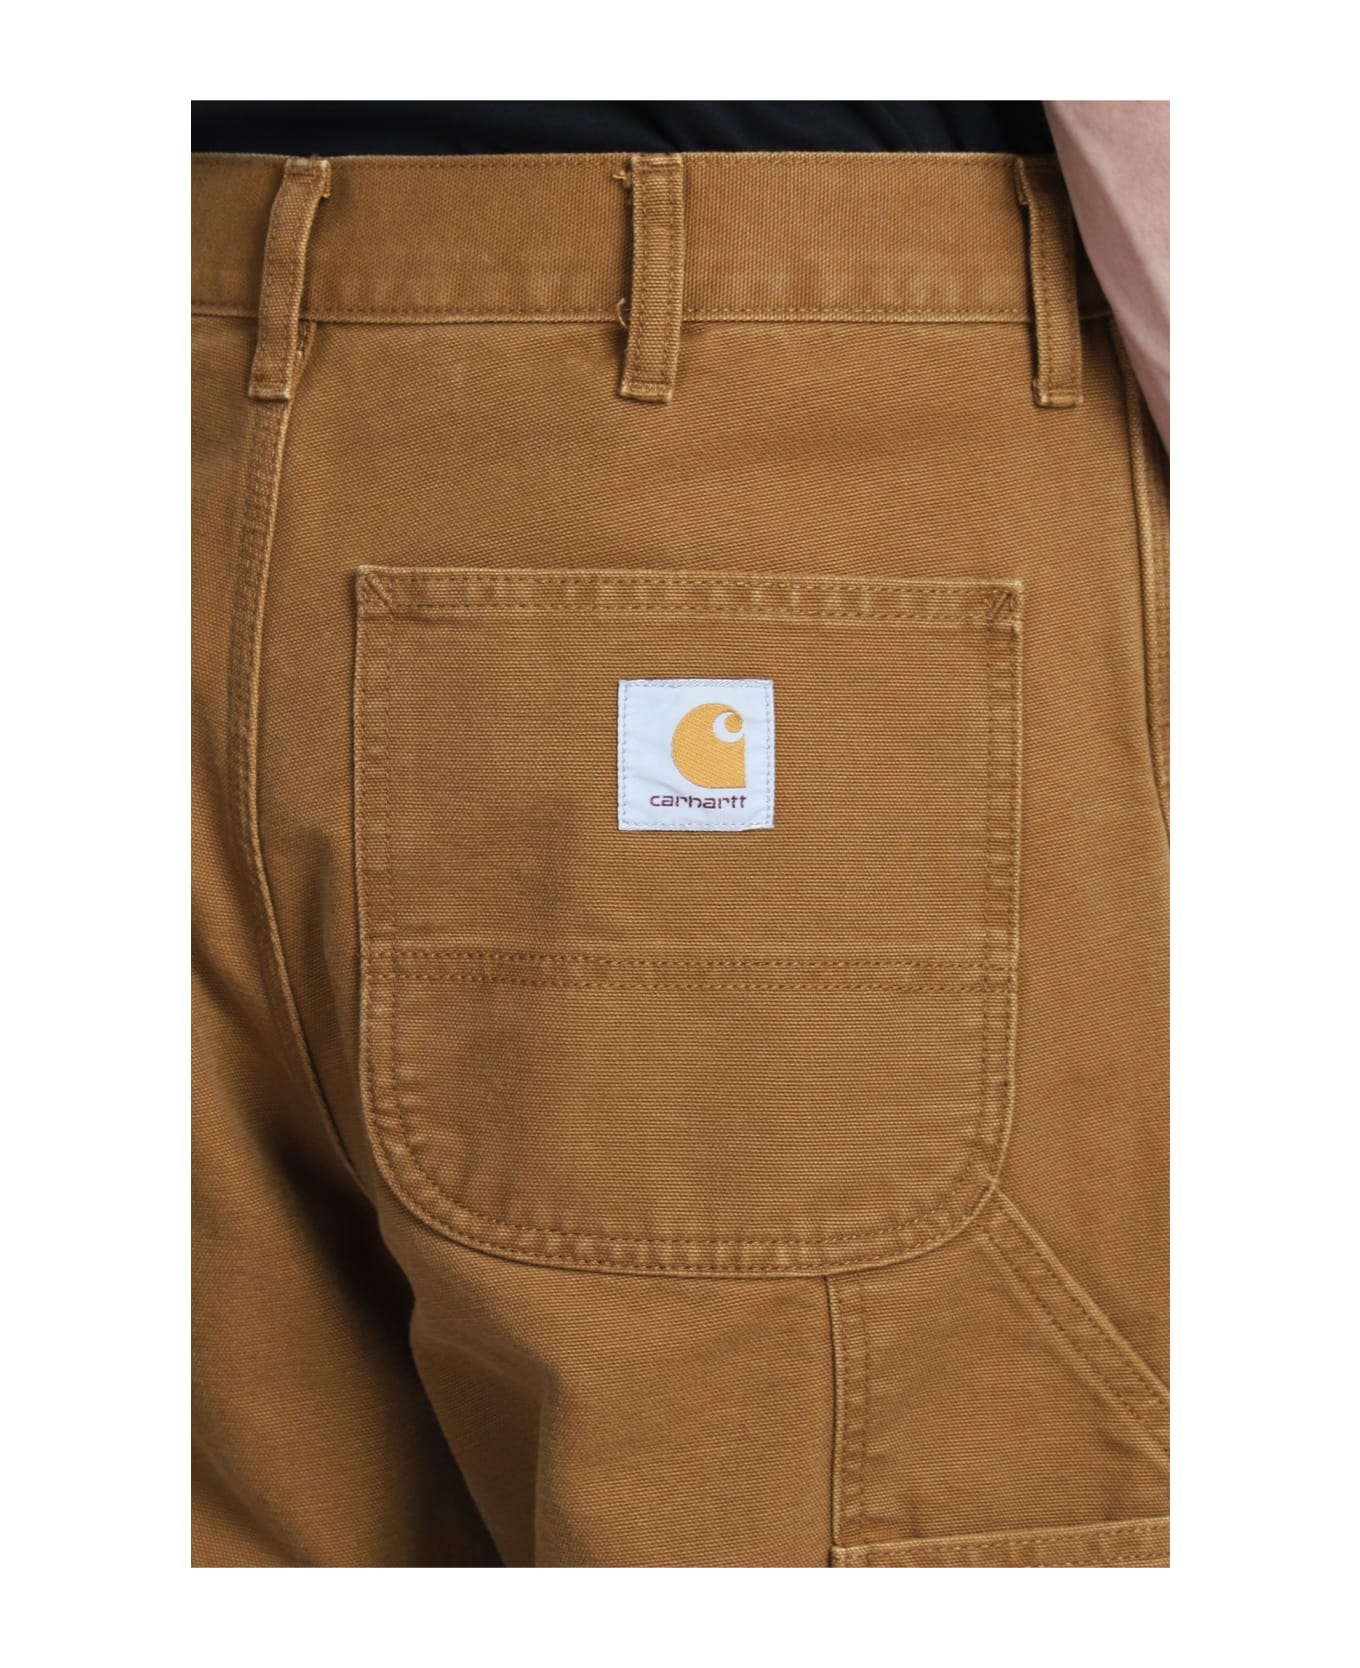 Carhartt Pants In Brown Cotton - Deep brown